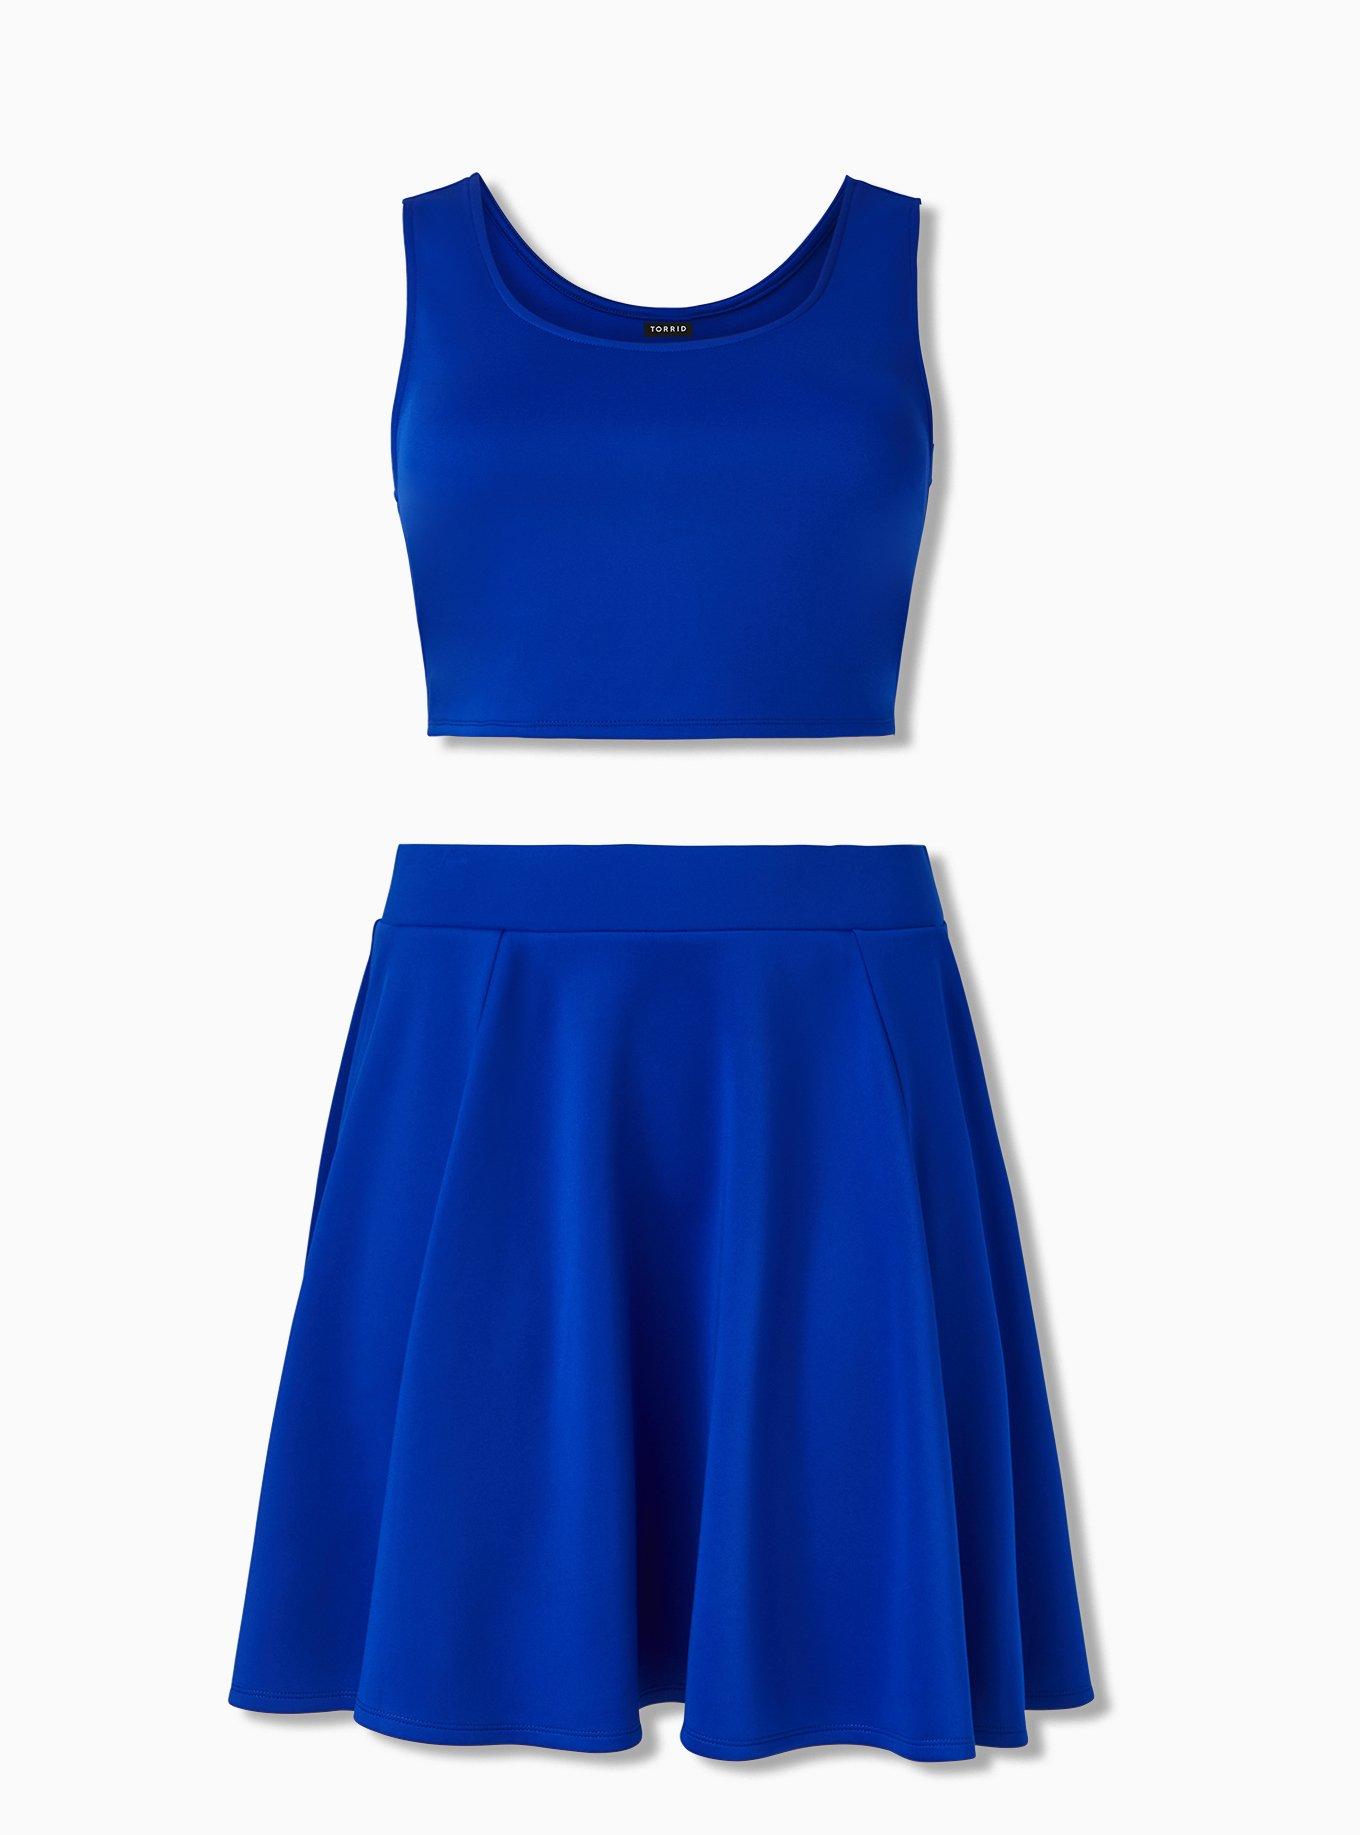 Hello Doll Electric Blue Spandex Dress - Salon Booteek